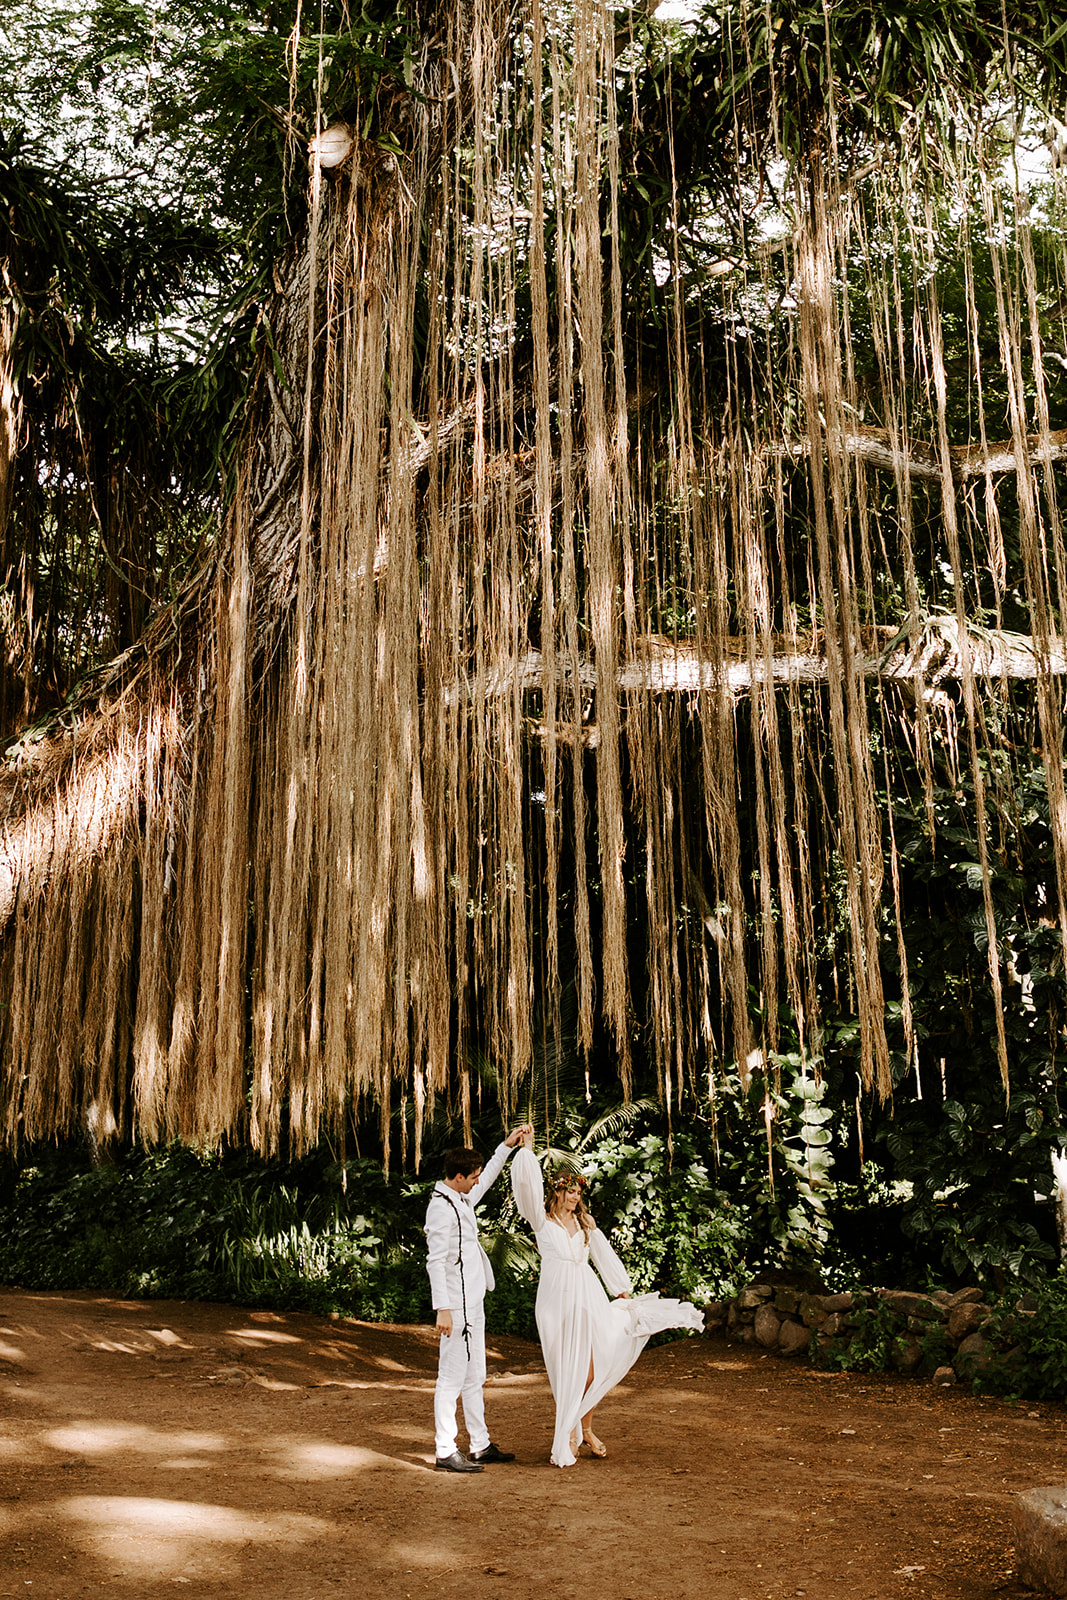 Maui elopement photographer captures wedding couple under a Hawaii banyan tree 